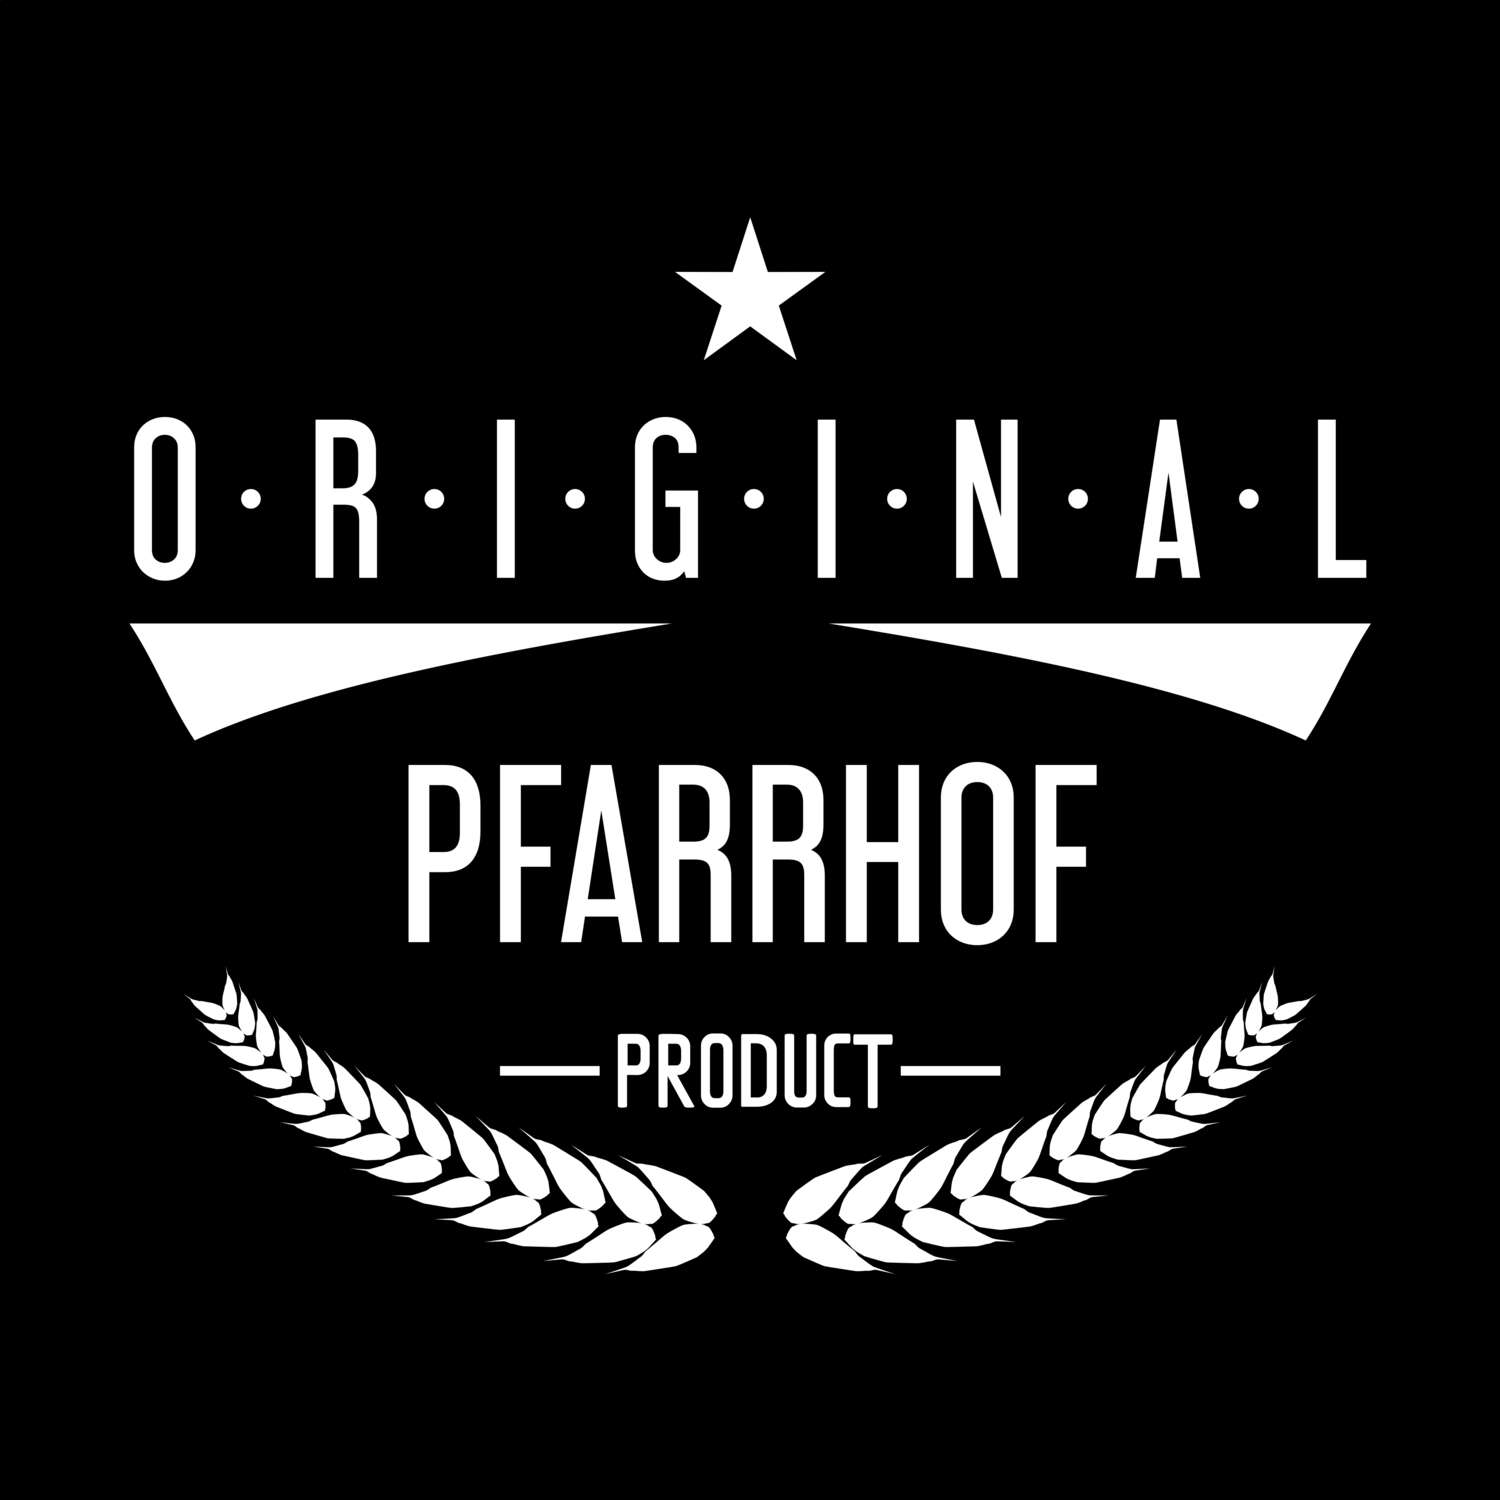 Pfarrhof T-Shirt »Original Product«